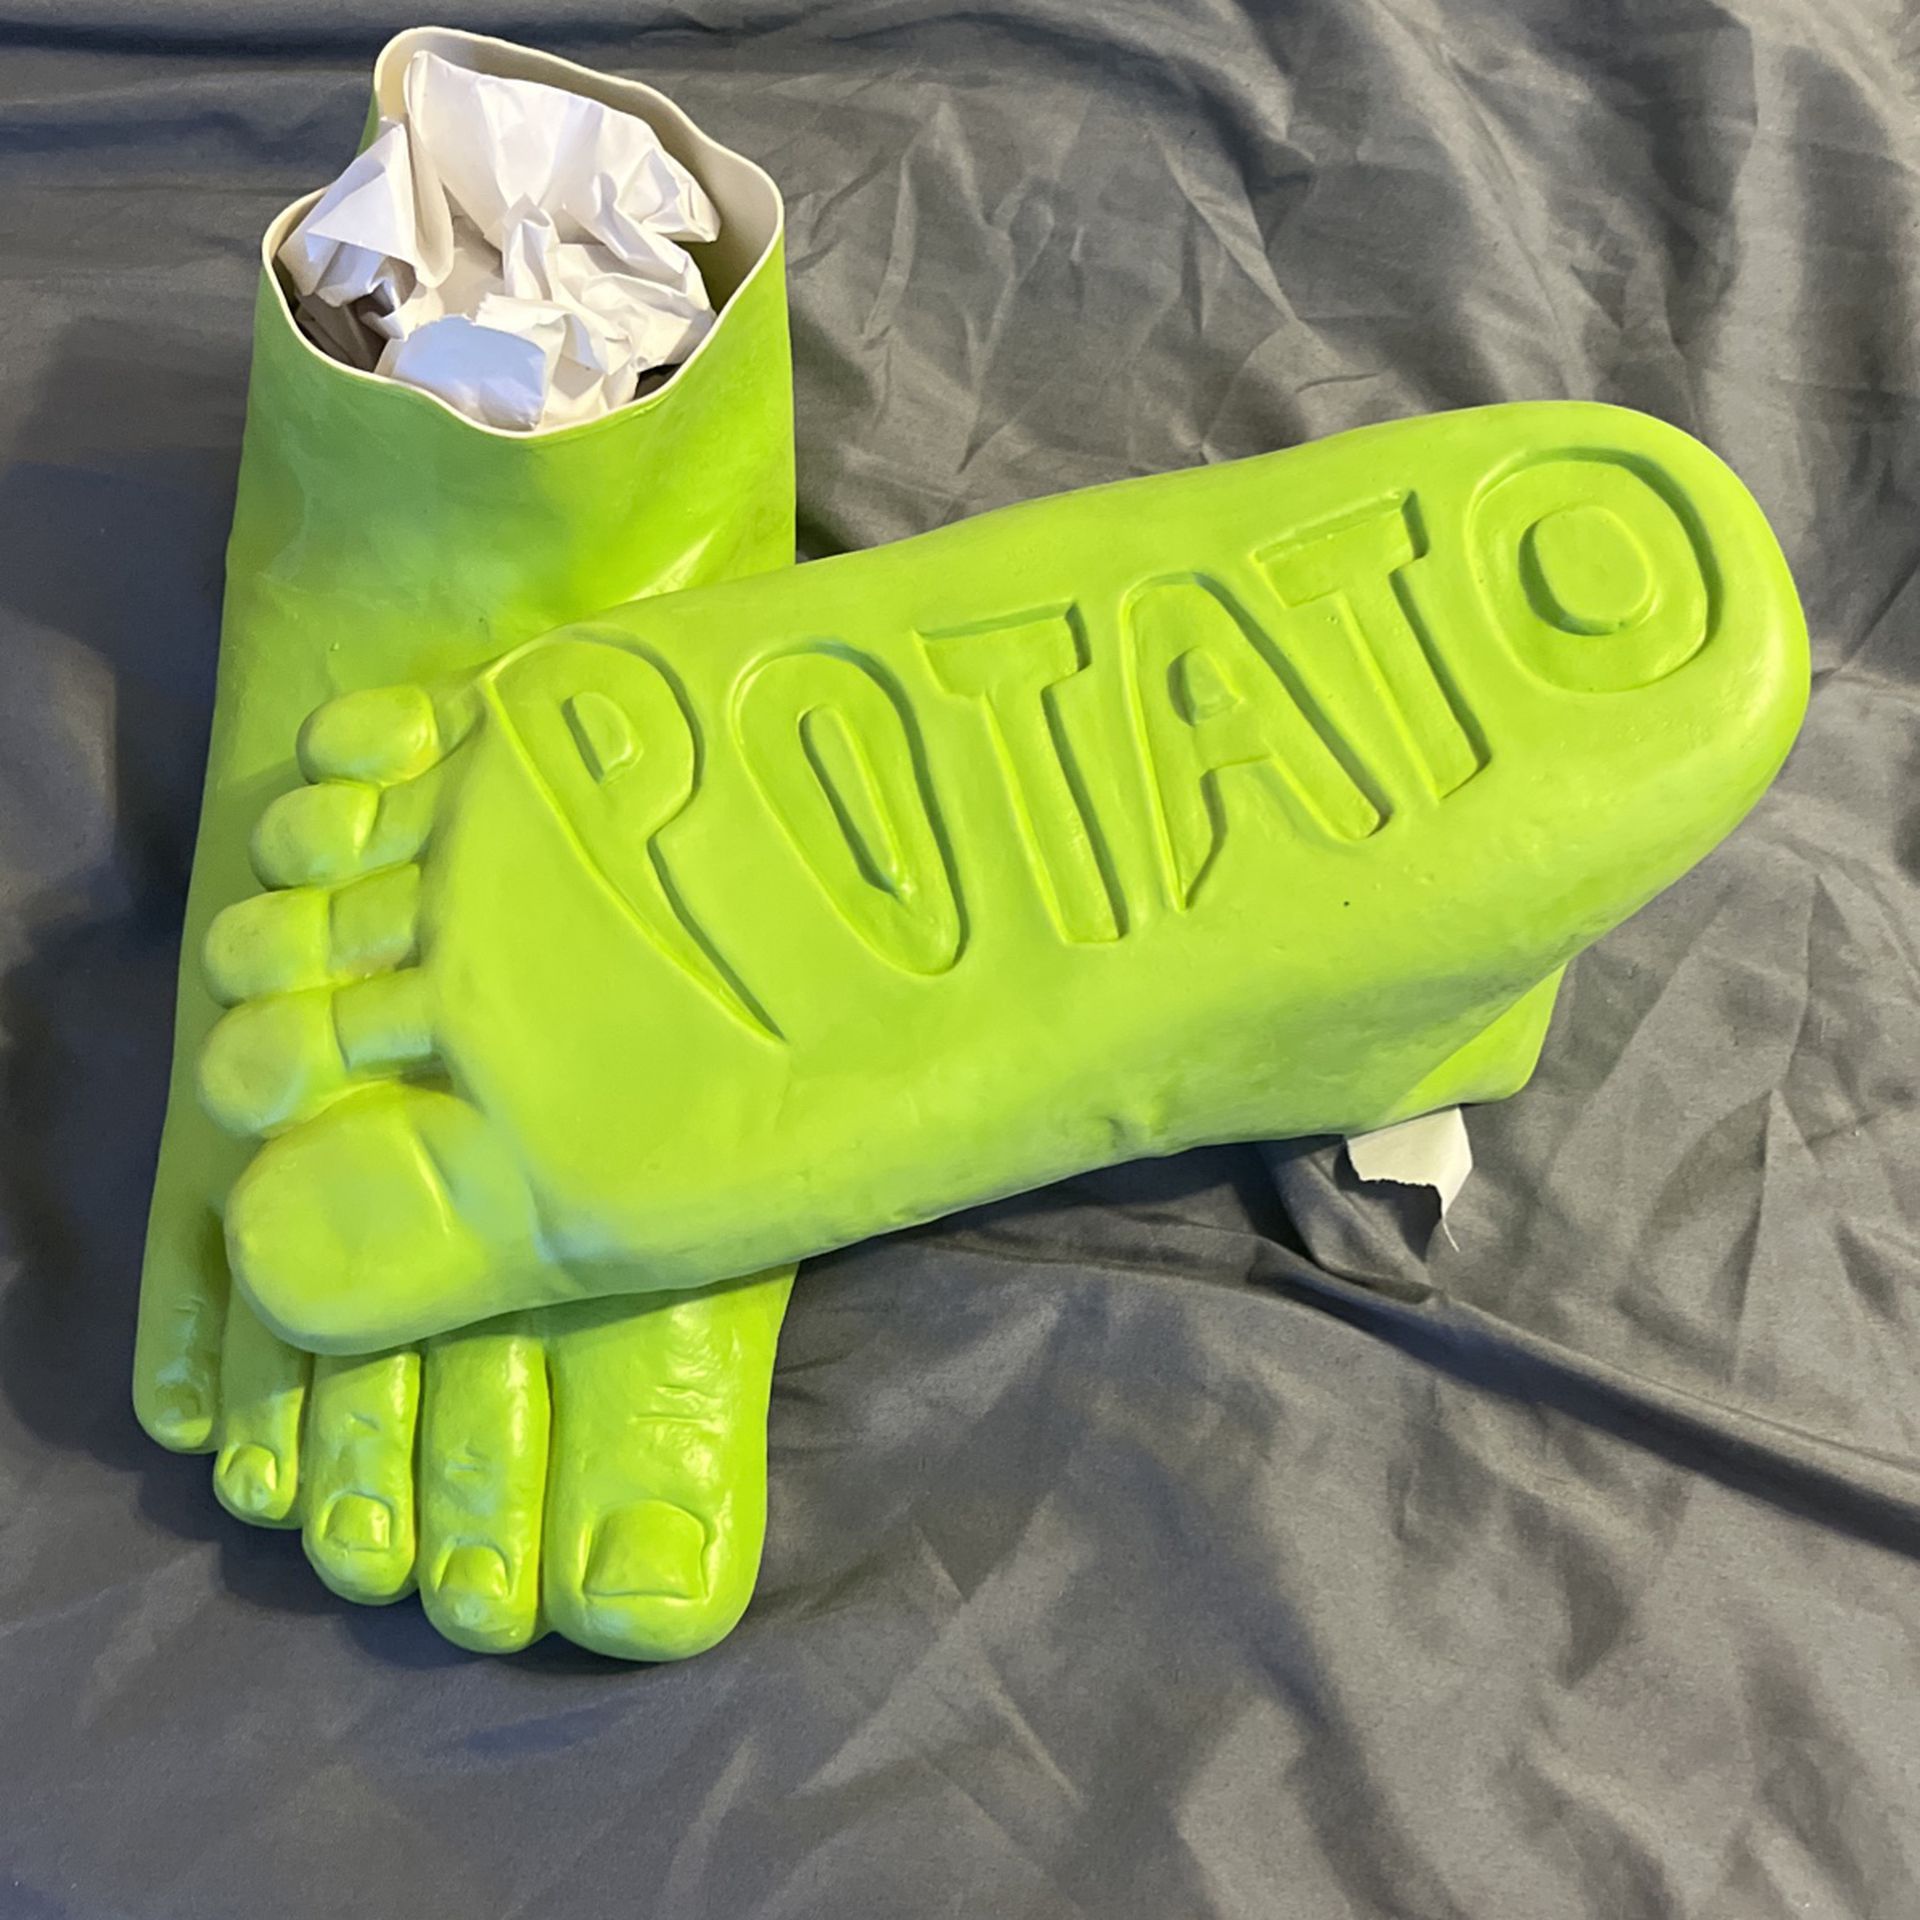 Imran Potato Slides for Sale in Portland, OR - OfferUp